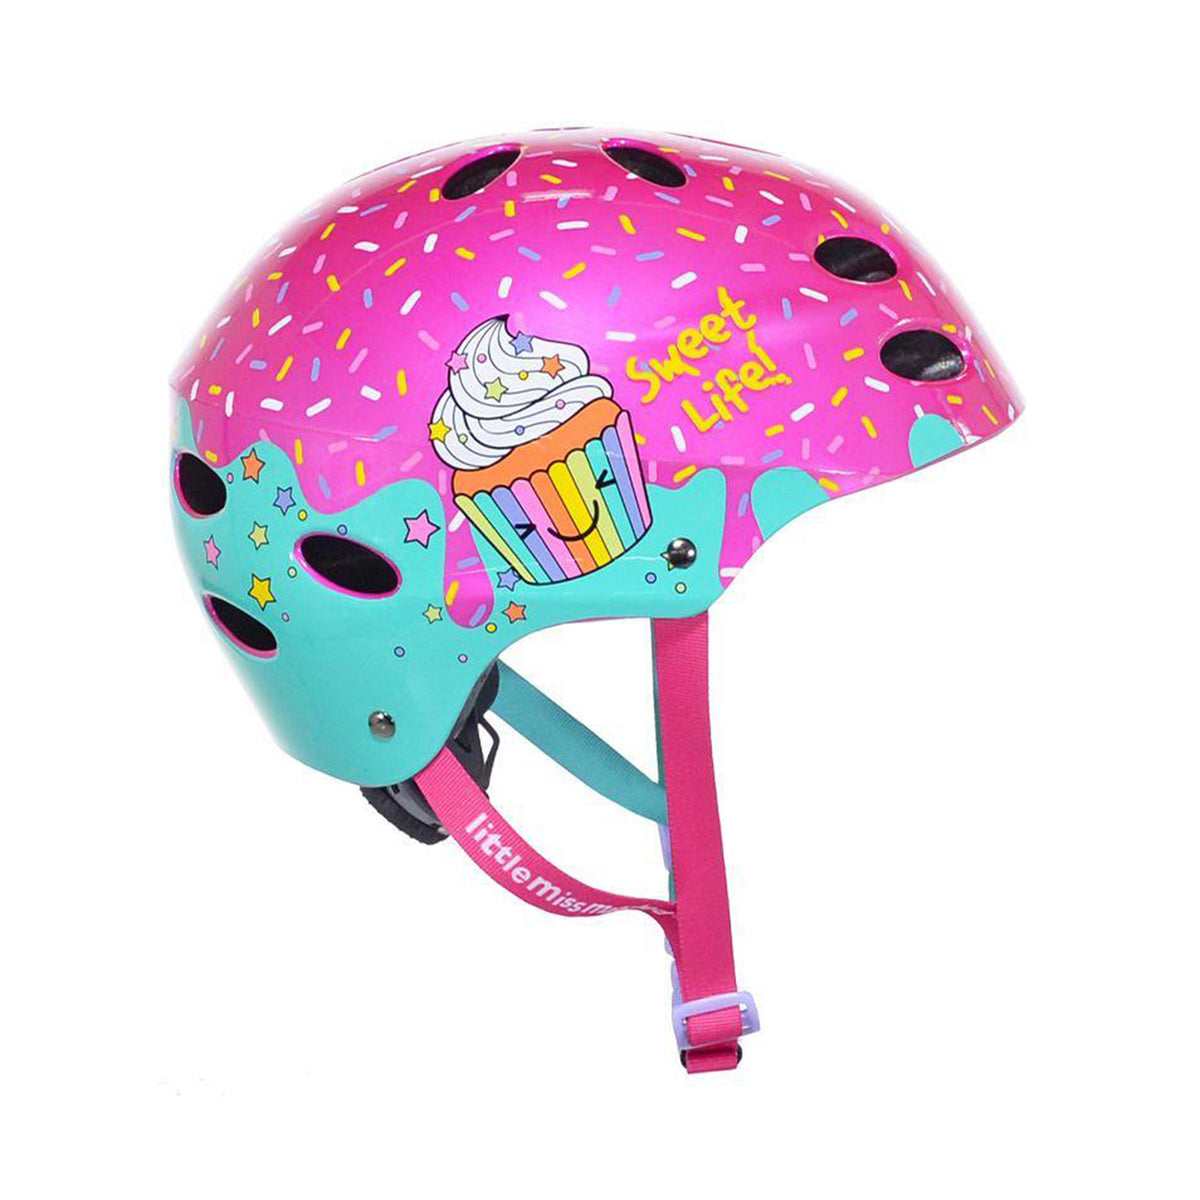 LittleMissMatched® Sweet Life Child Multi-Sport Helmet | Helmet for Kids Ages 5+